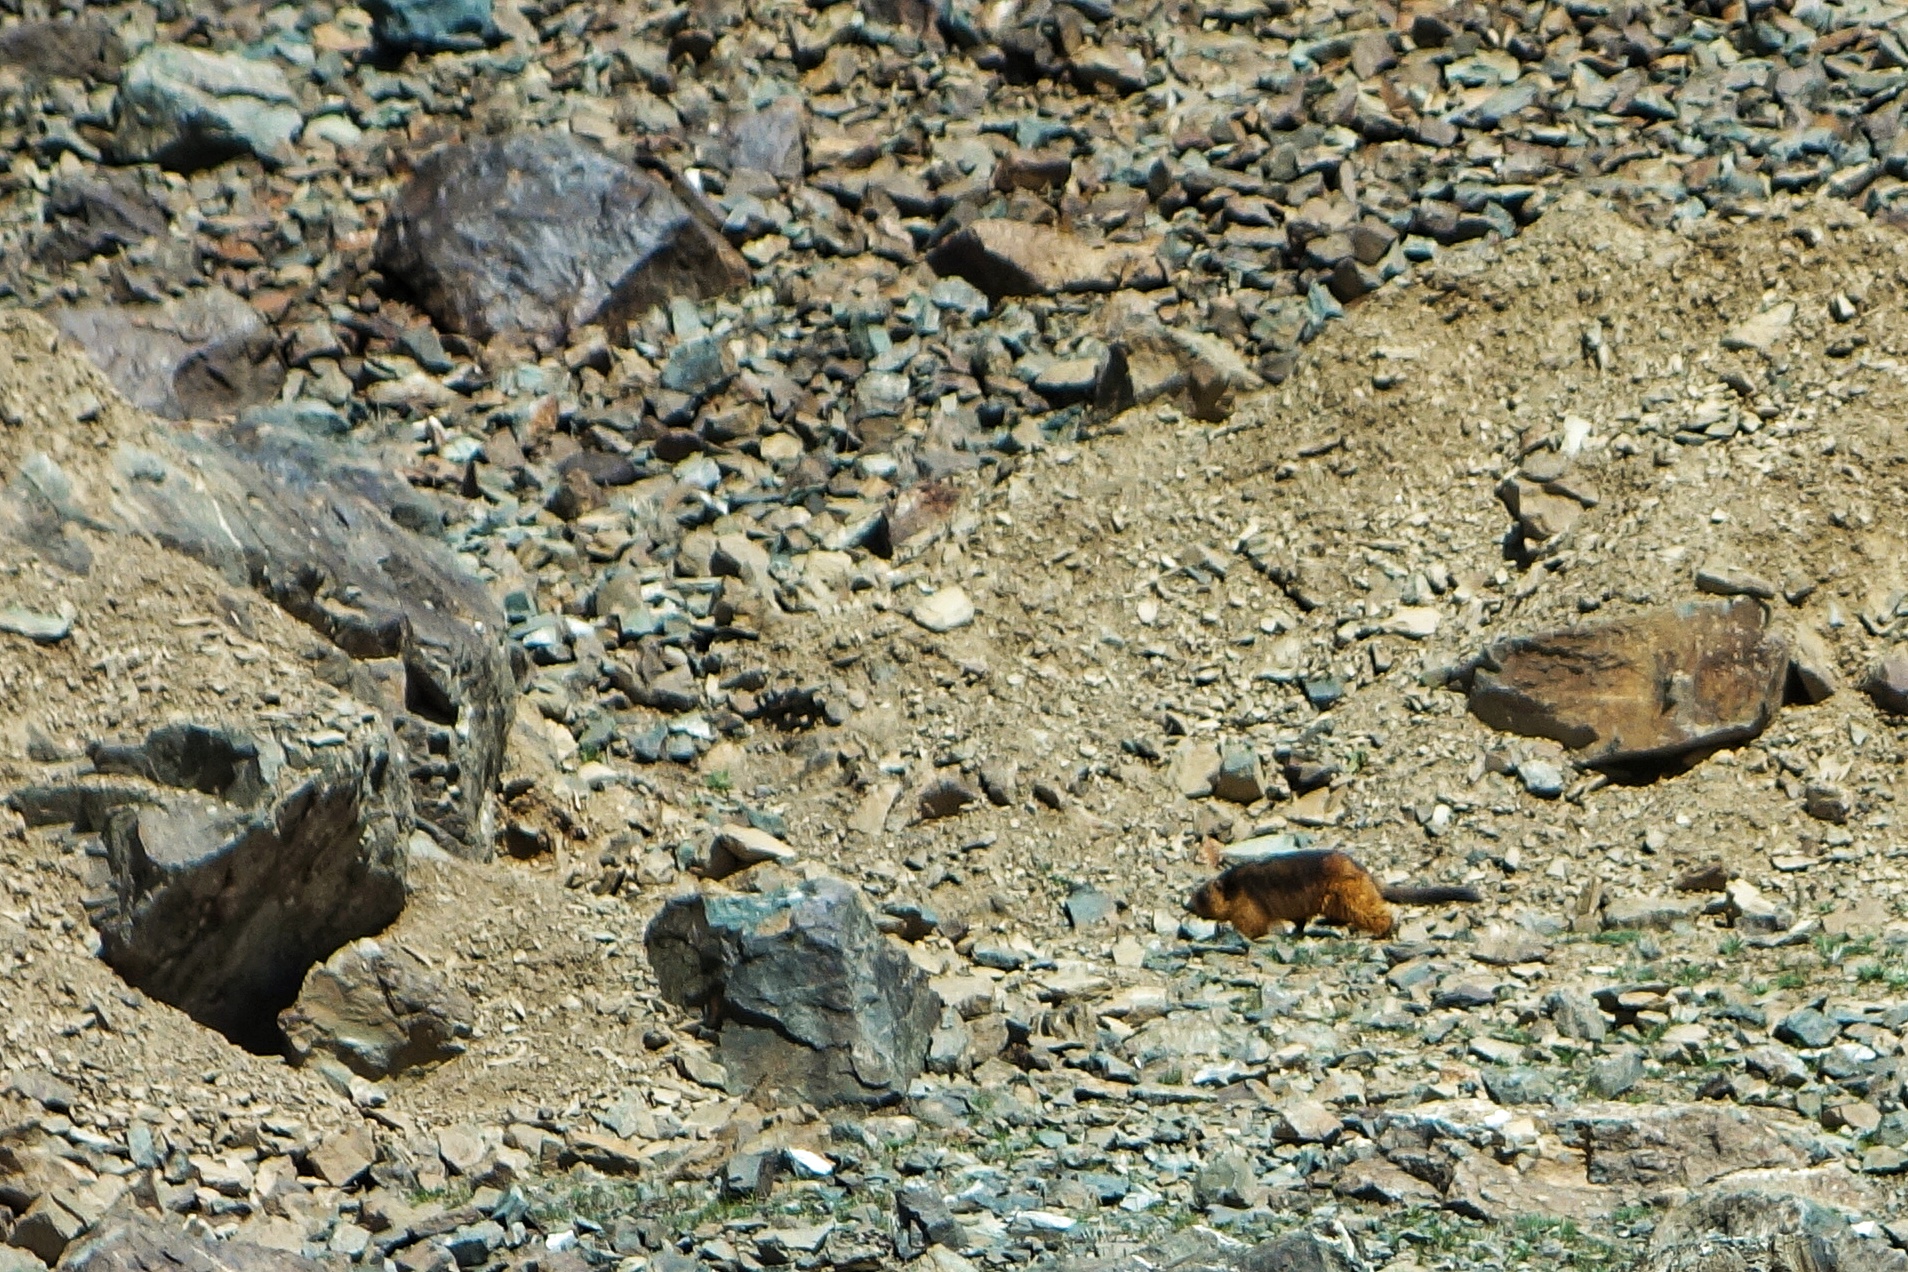 Himalayan Marmots AKA the Gold-Digging Ants of Herodotus - Photorator